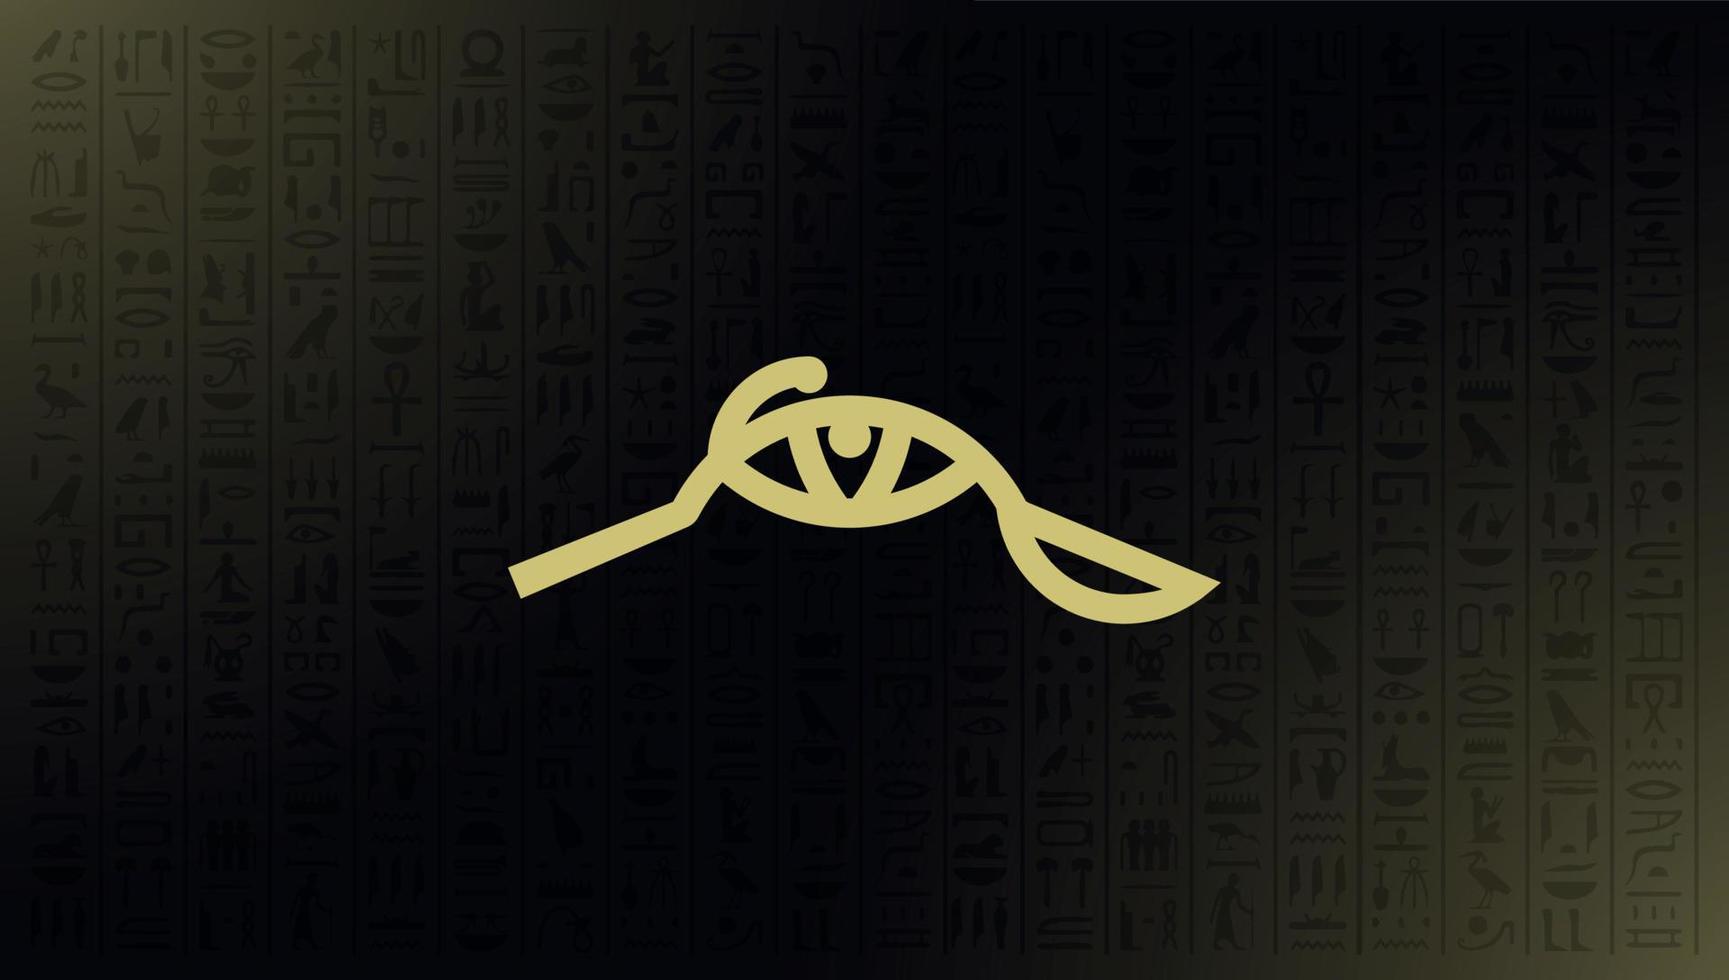 egyptens namnsymbol vektor